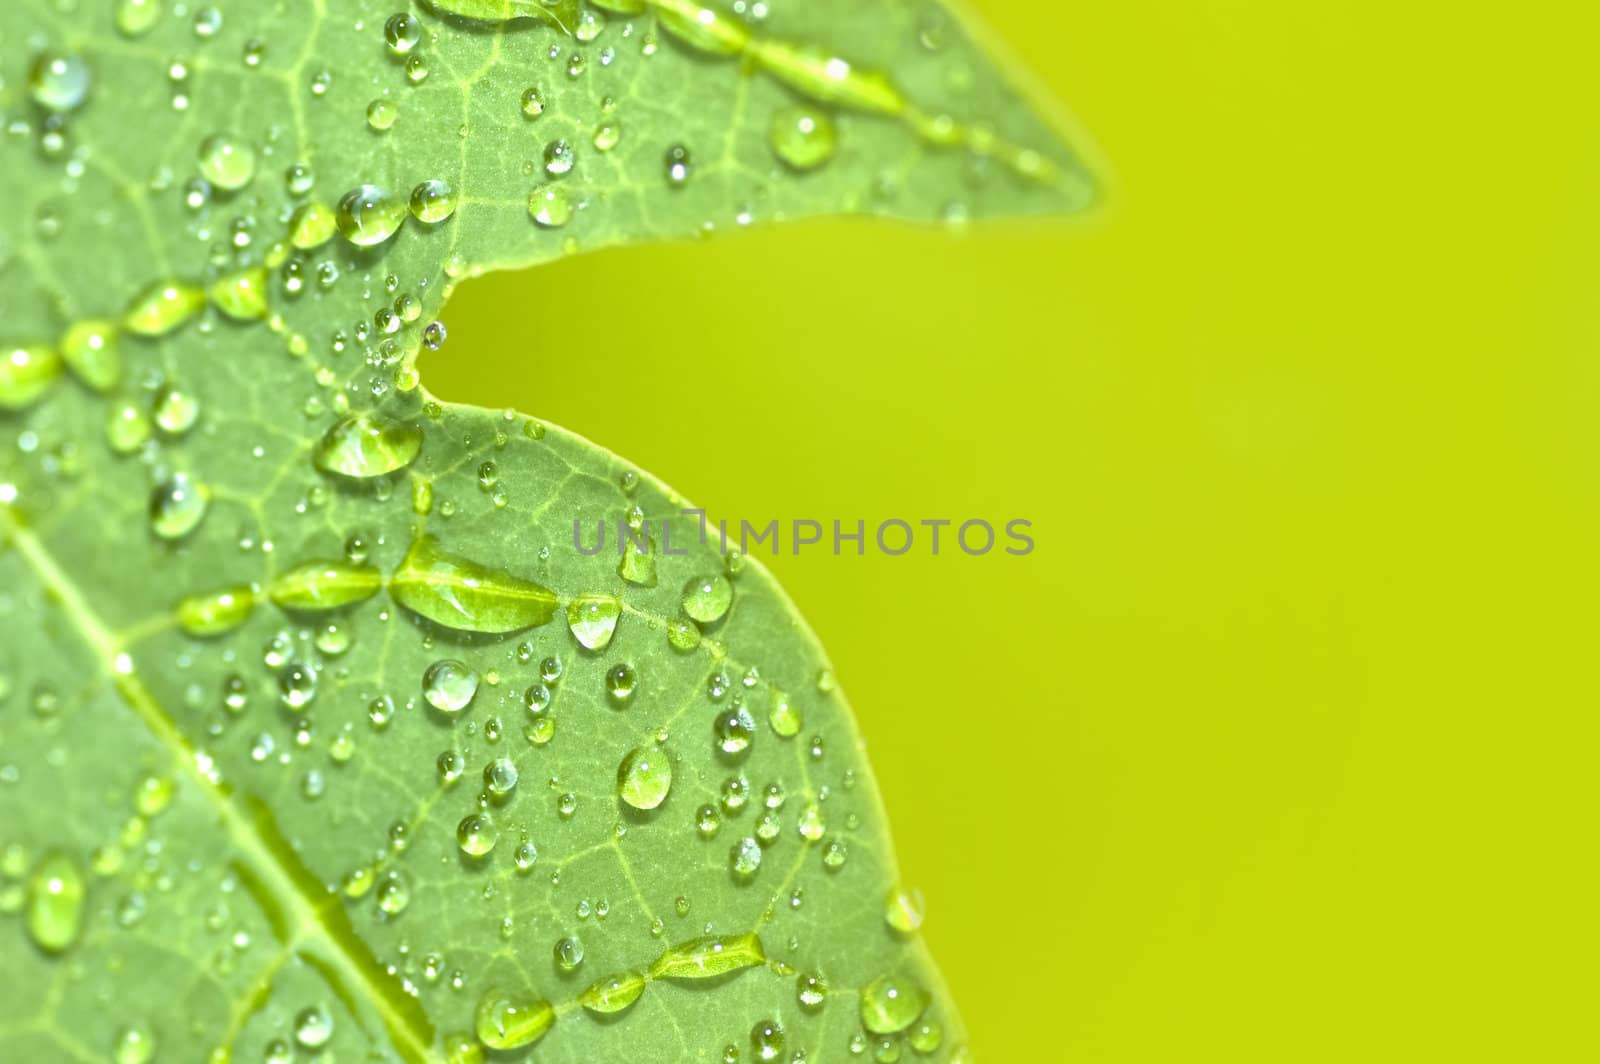 Dew on leaf by szefei